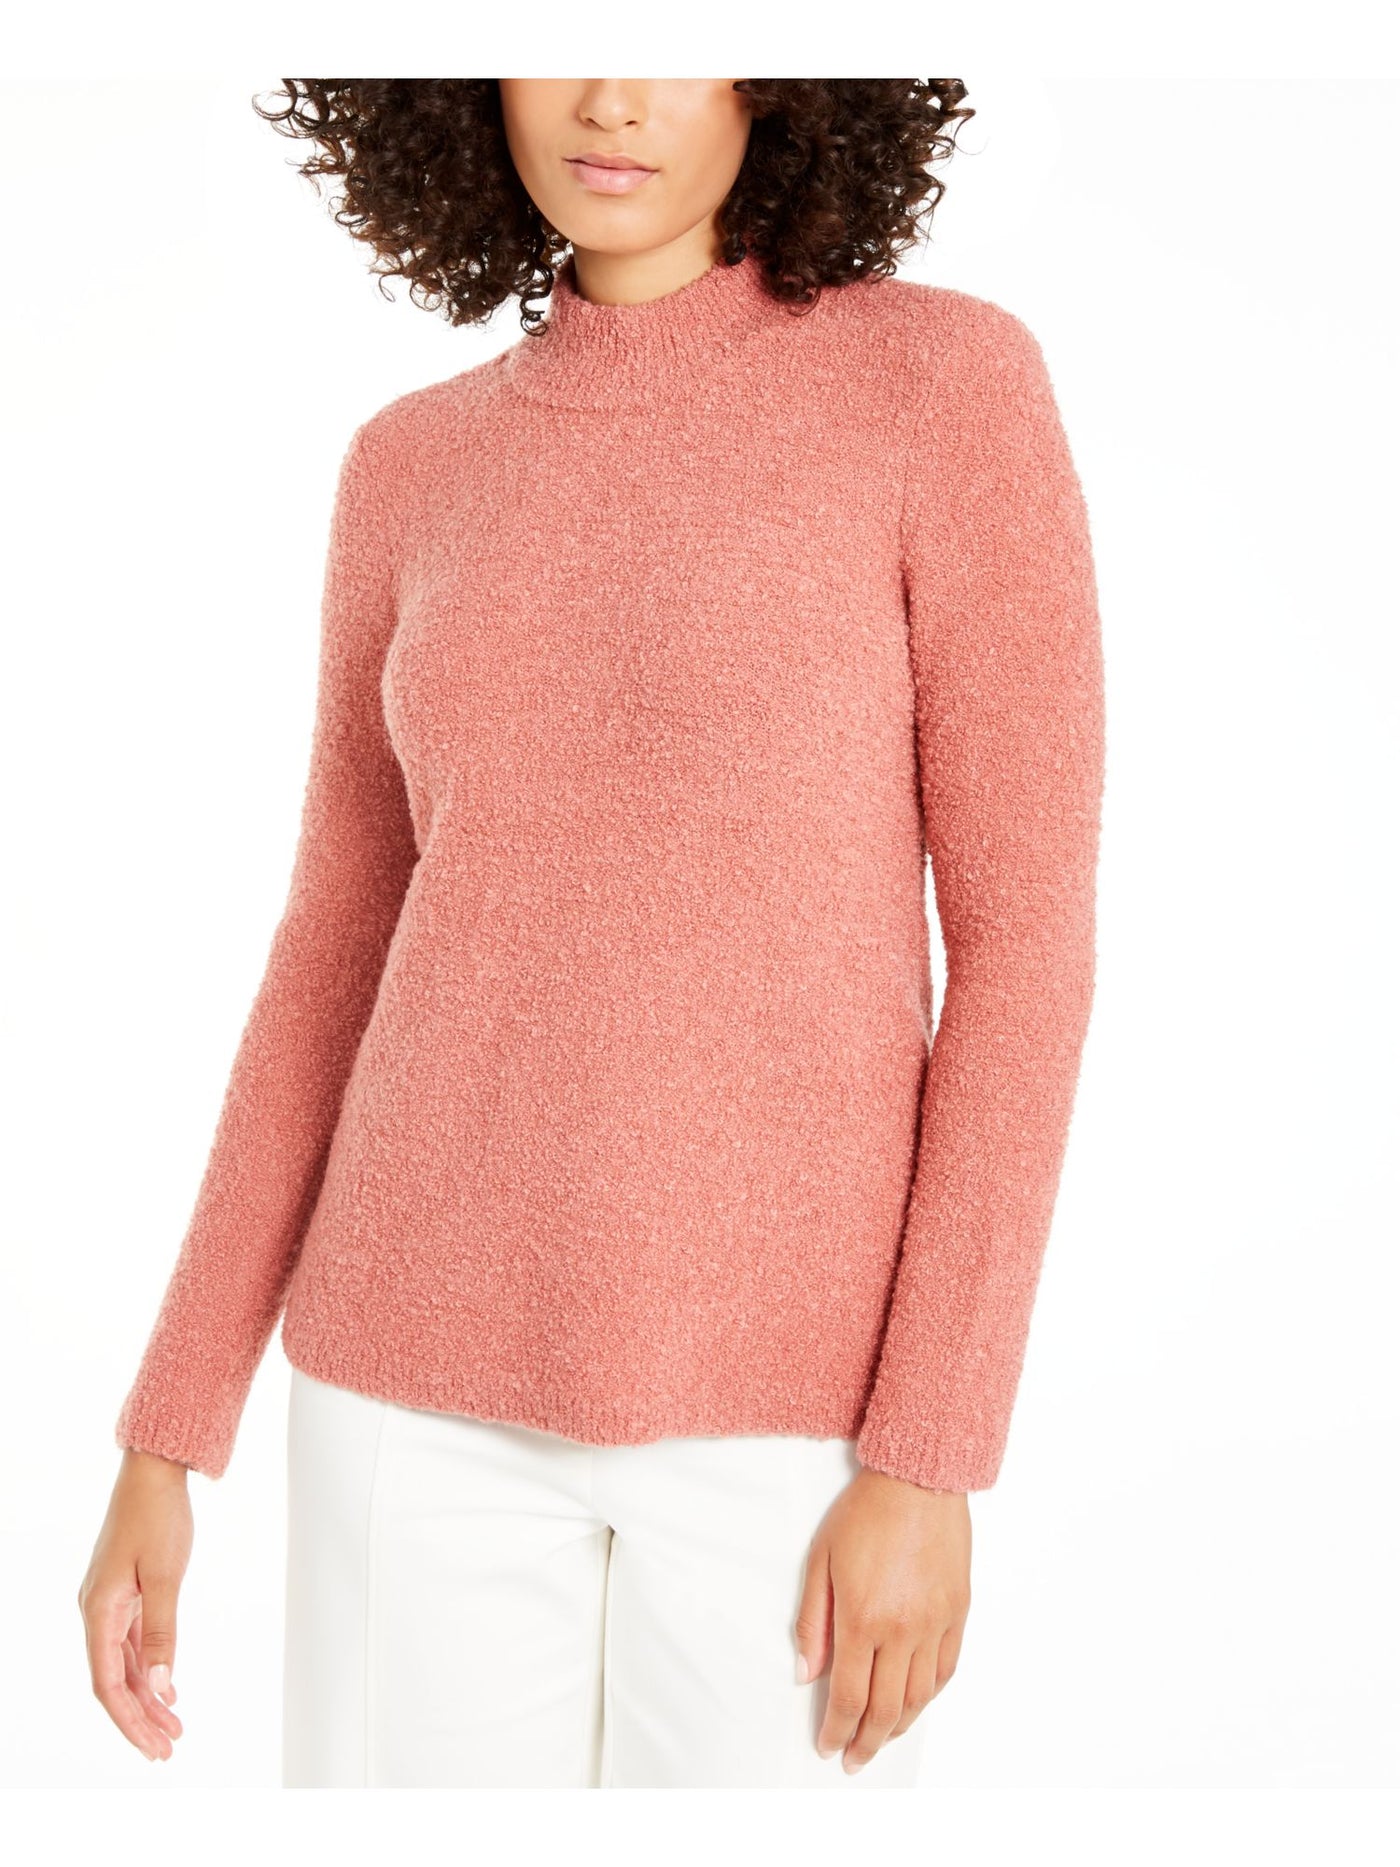 ALFANI Womens Pink Textured Long Sleeve Turtle Neck Sweater XL